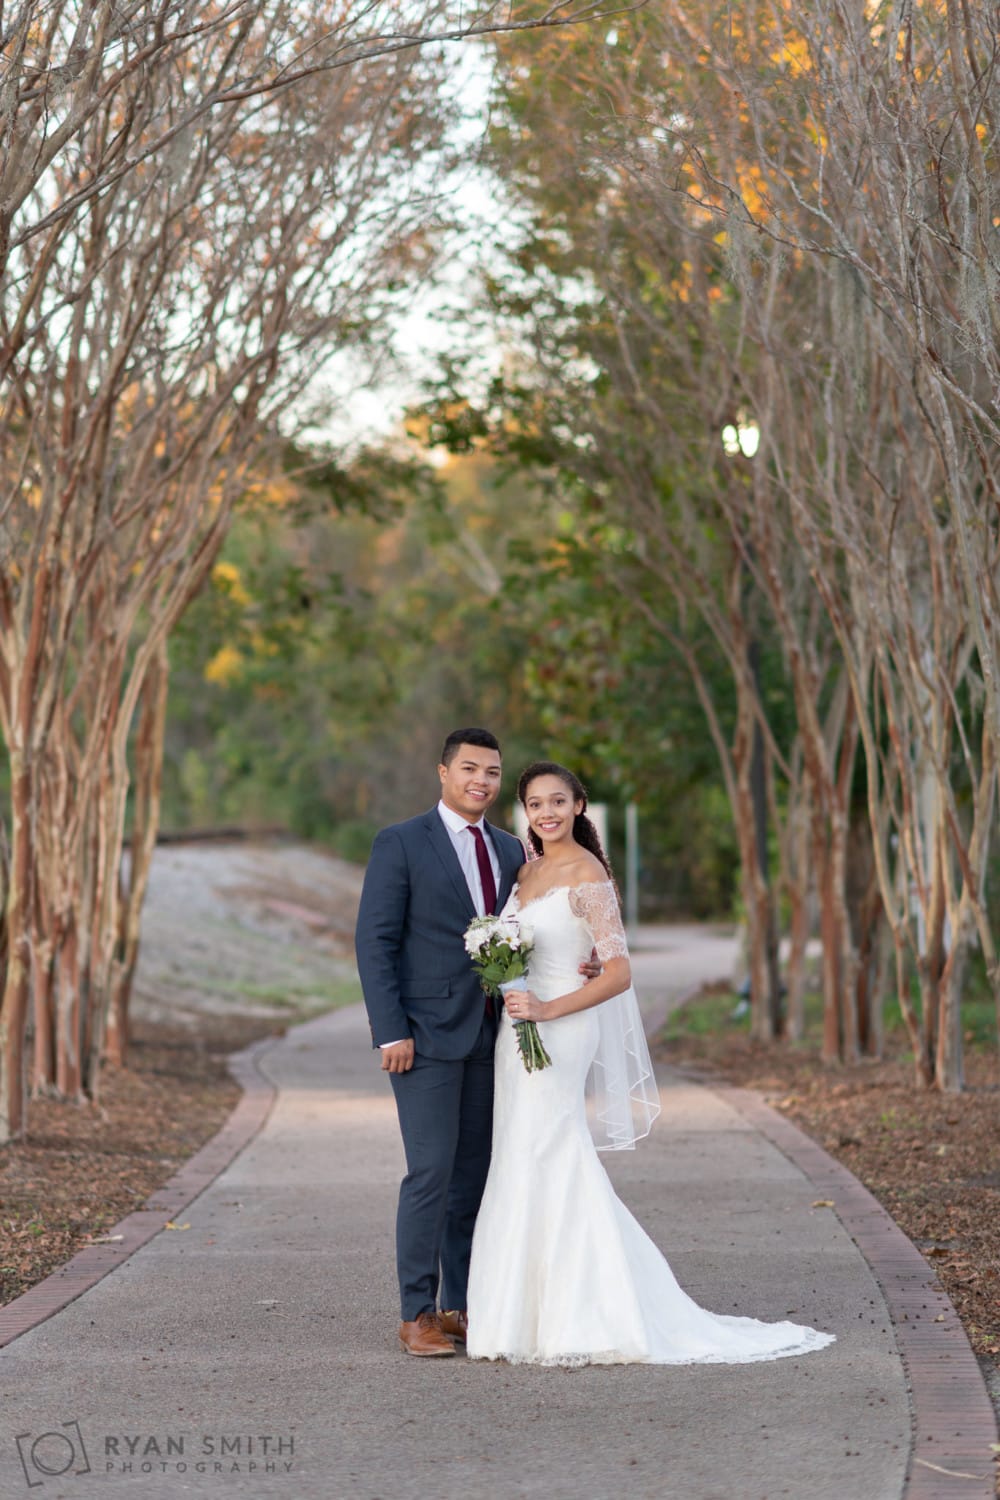 Bride and groom under the winter trees on the walkway - Conway Riverwalk